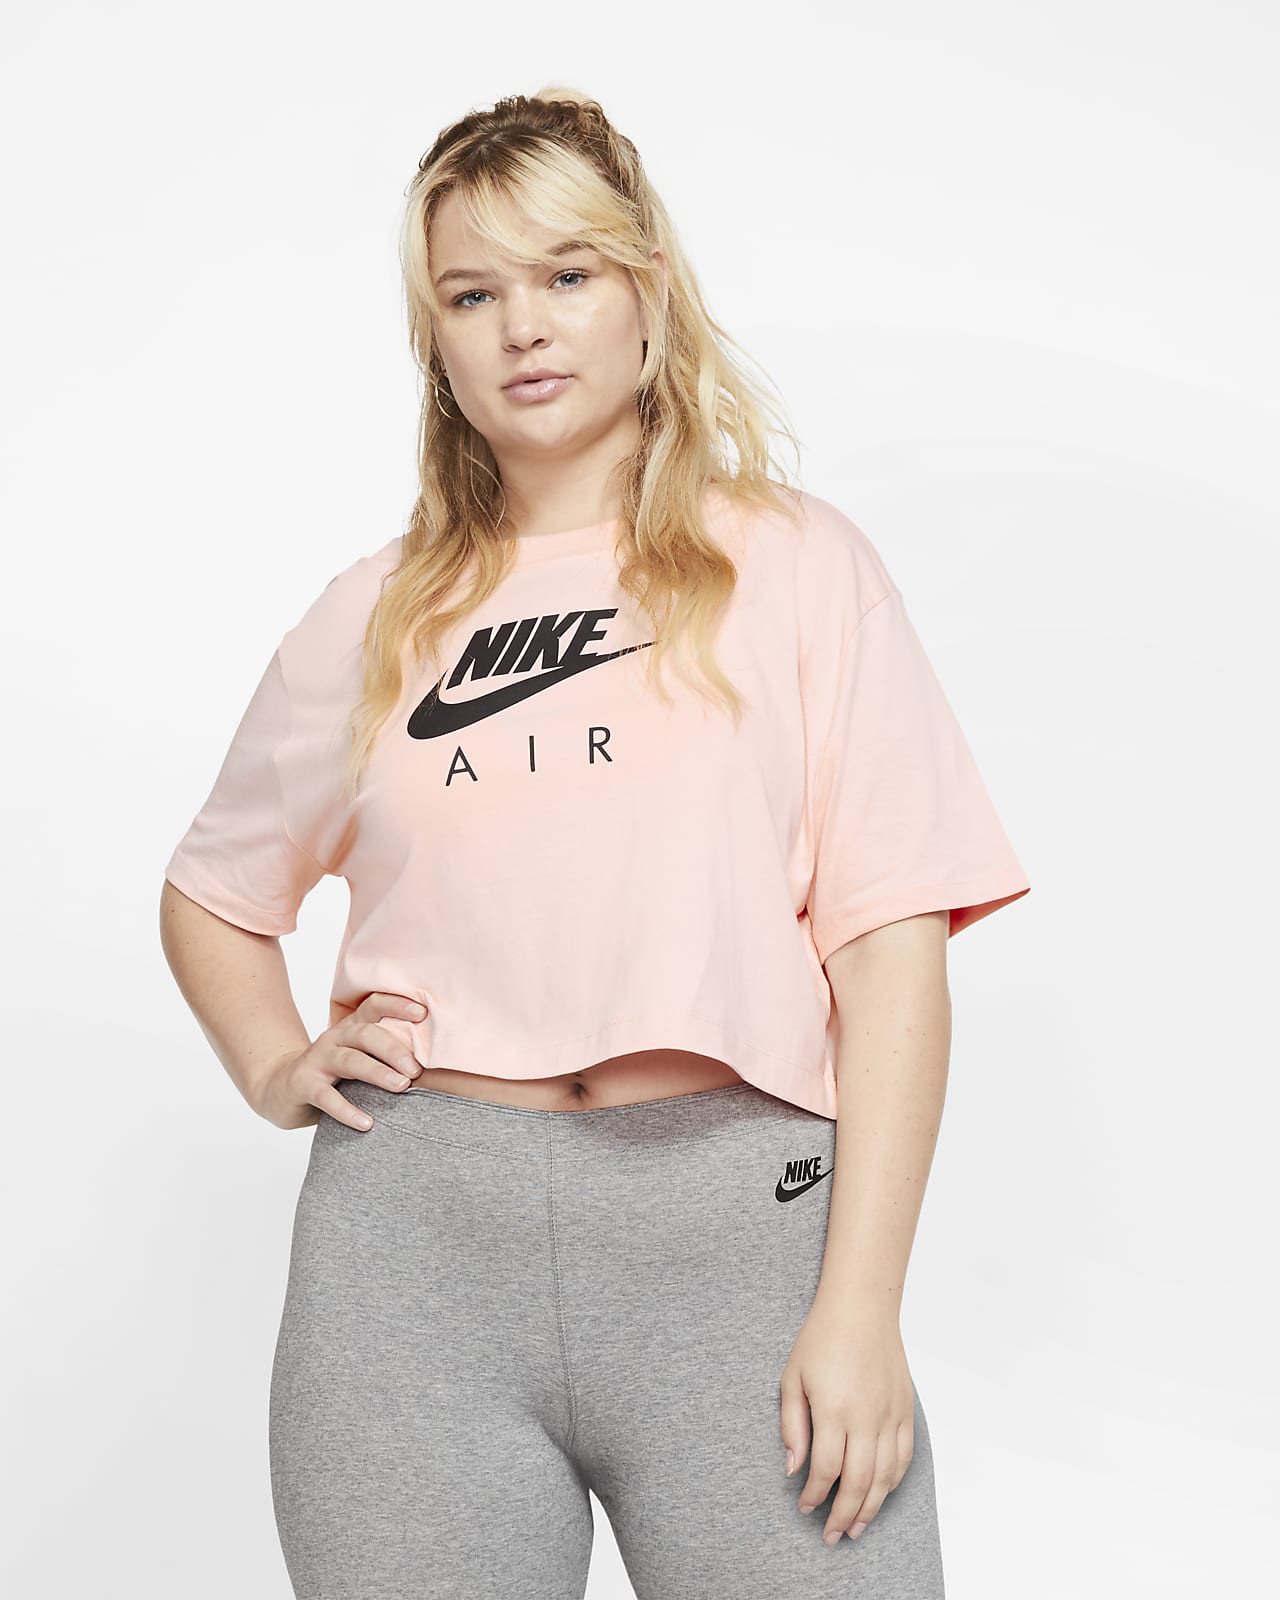 Nike Air Kurzarmoberteil für Damen (große Größe)